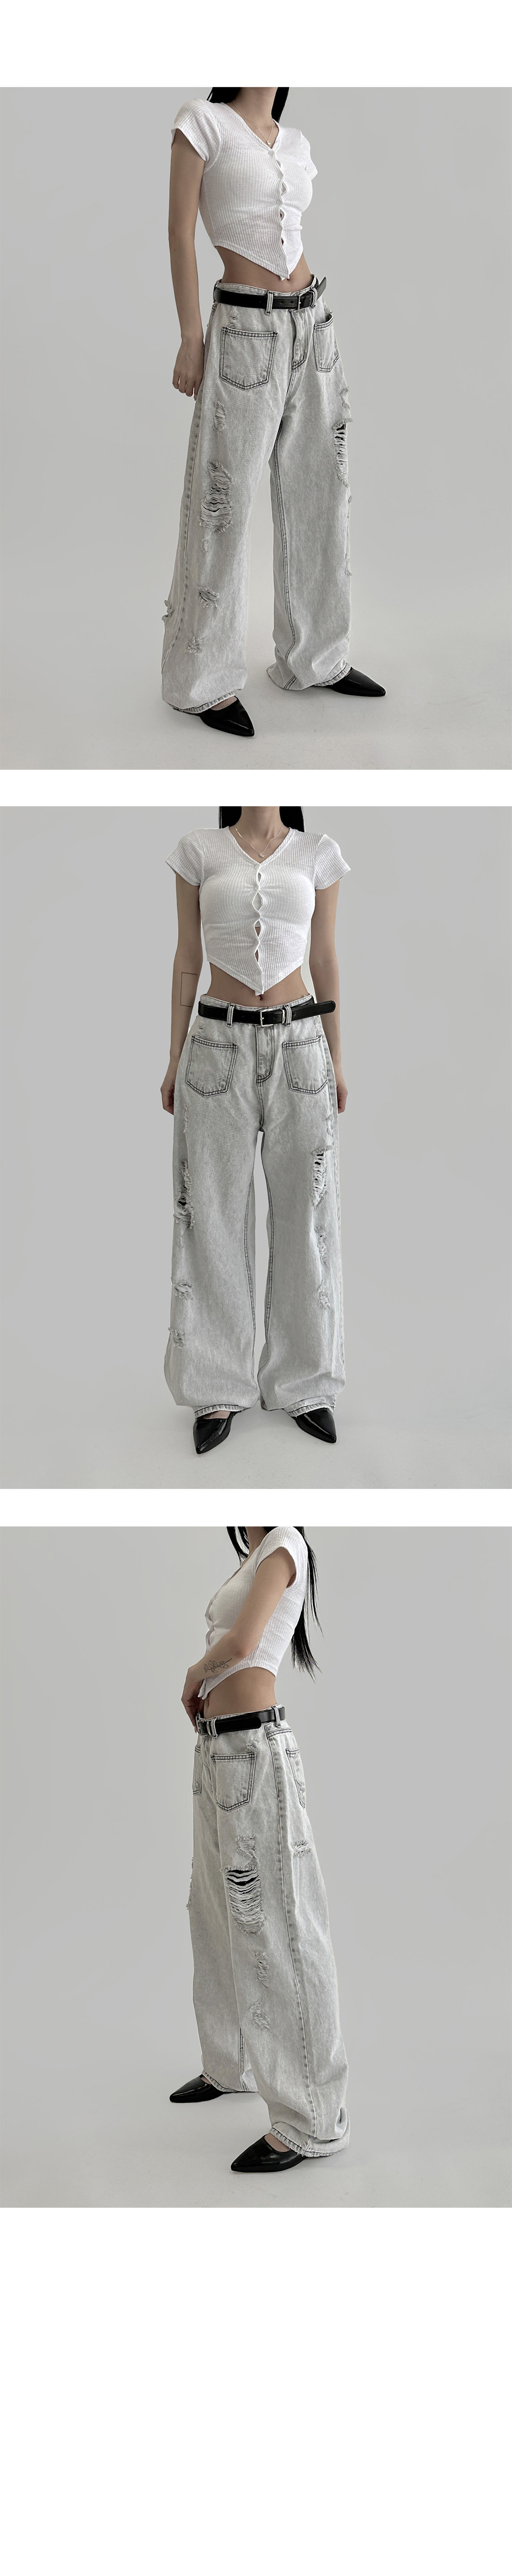 suspenders skirt/pants grey color image-S1L5